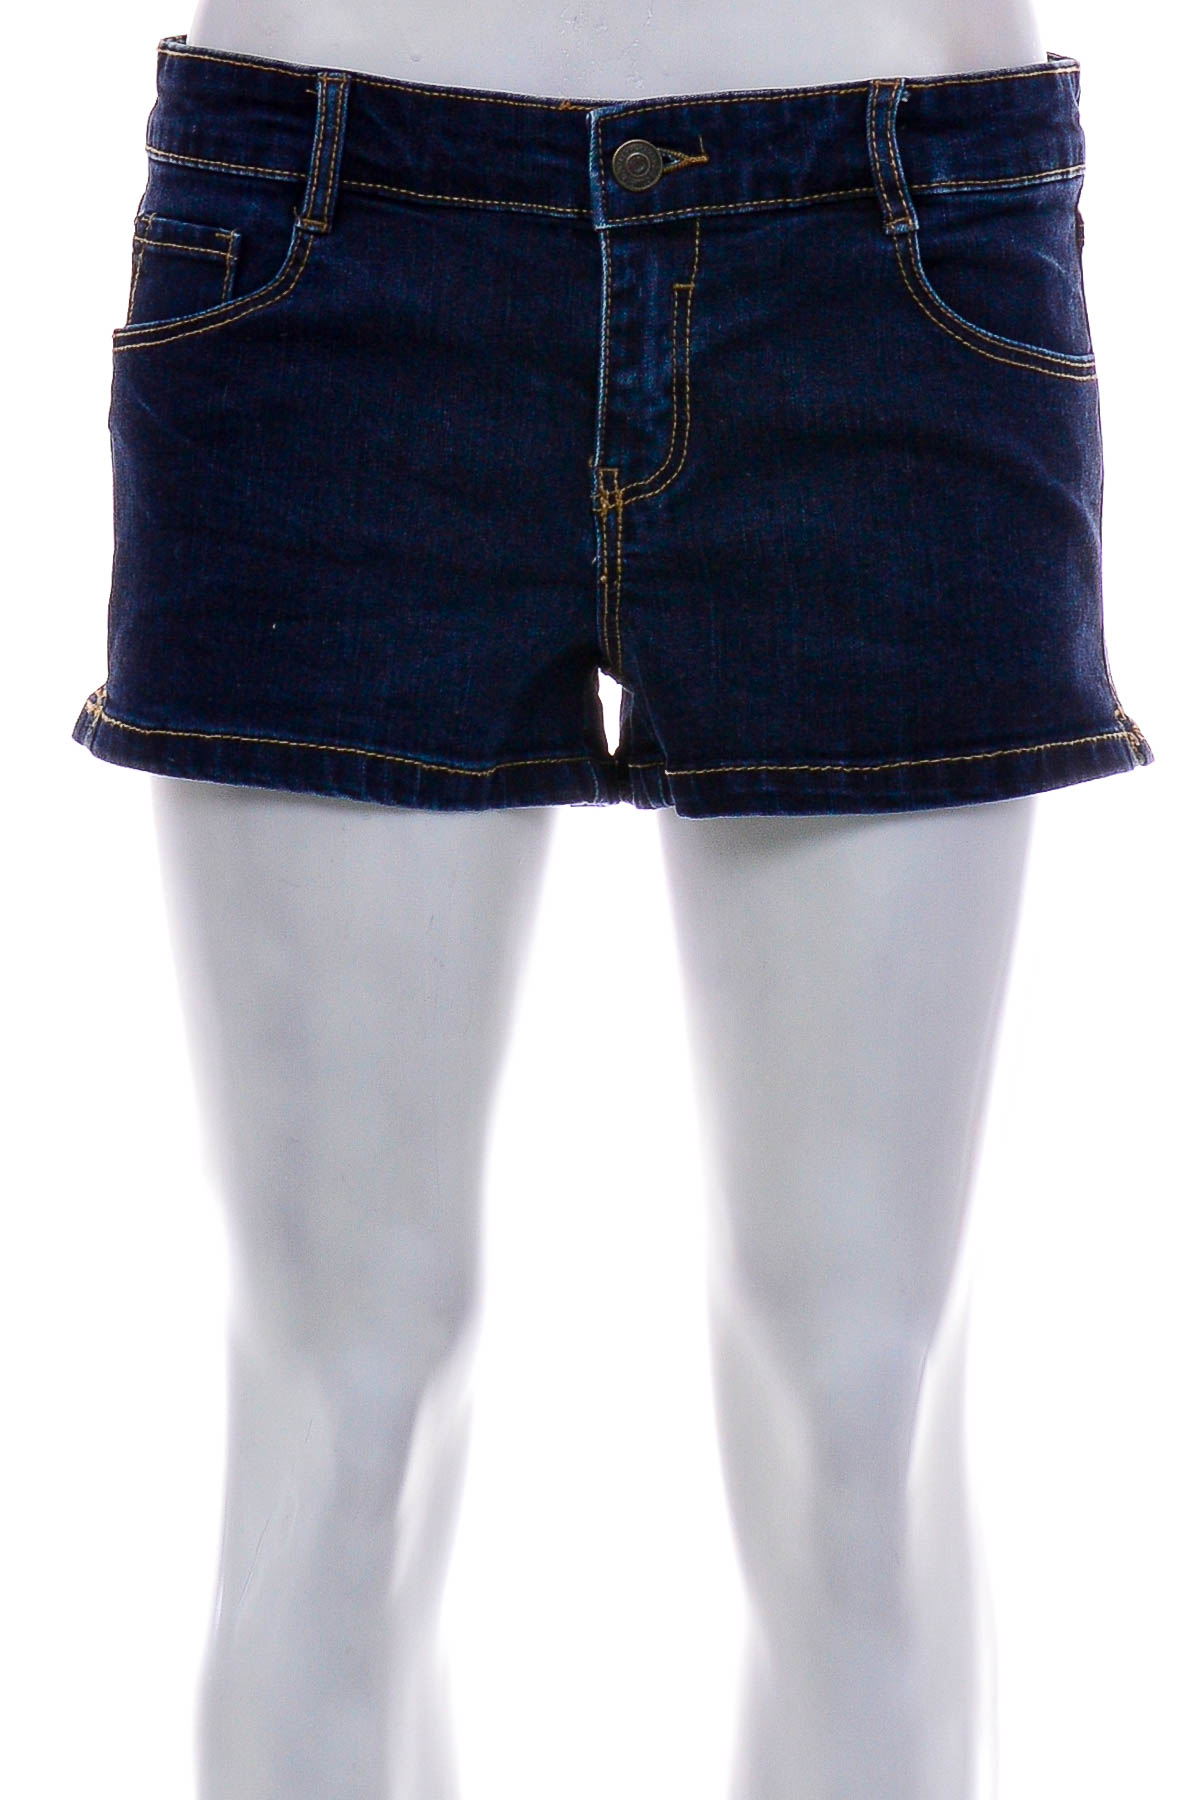 Female shorts - Pimkie - 0